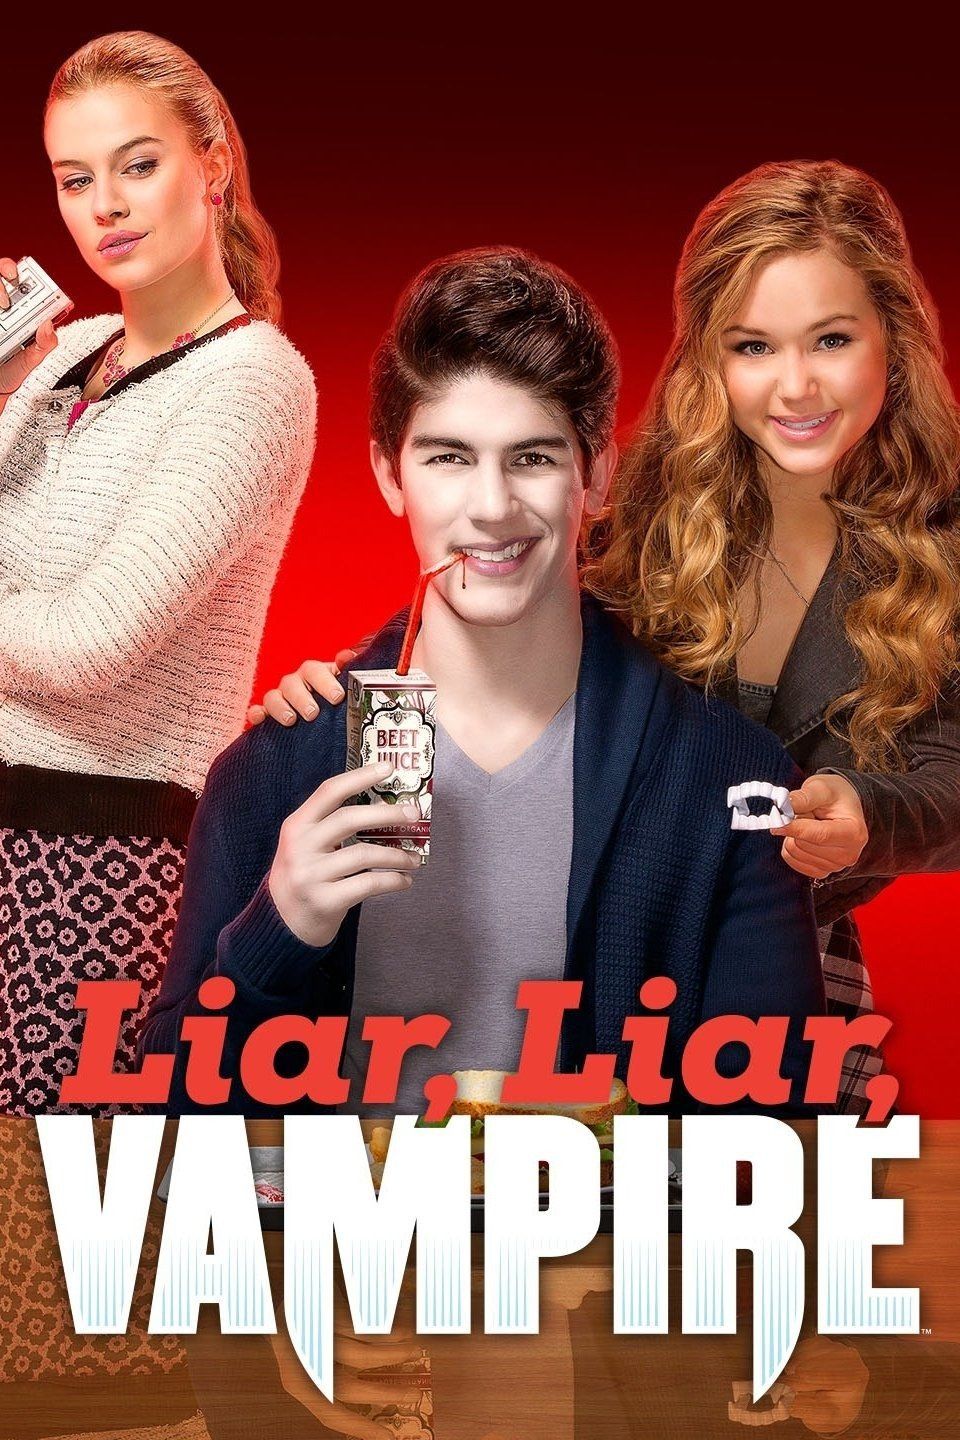 liar liar vampire